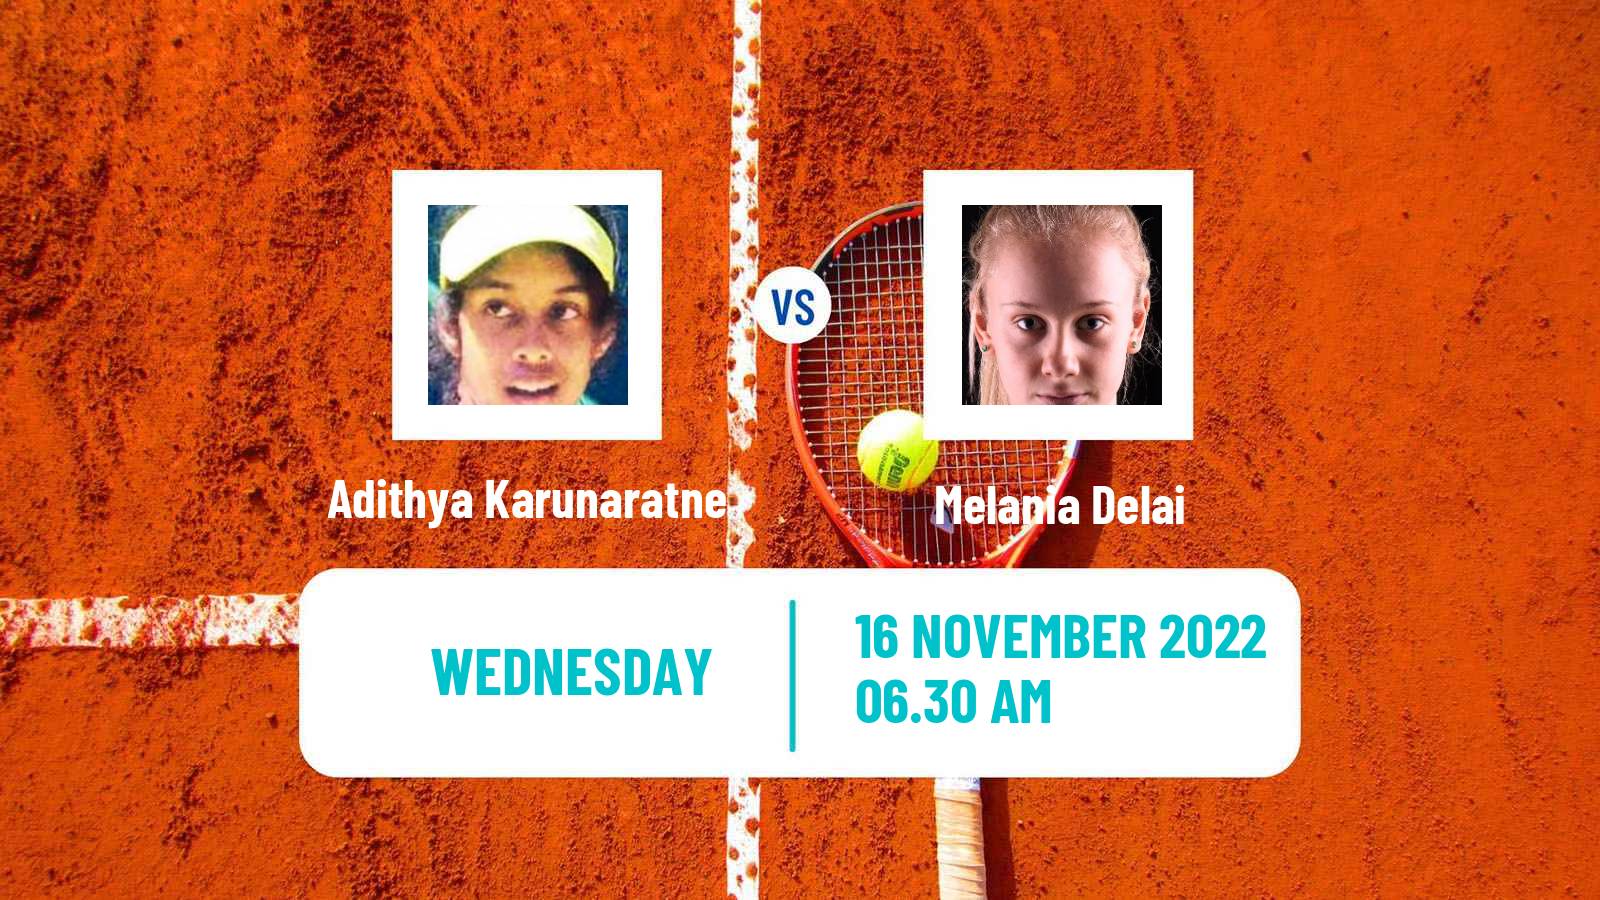 Tennis ITF Tournaments Adithya Karunaratne - Melania Delai